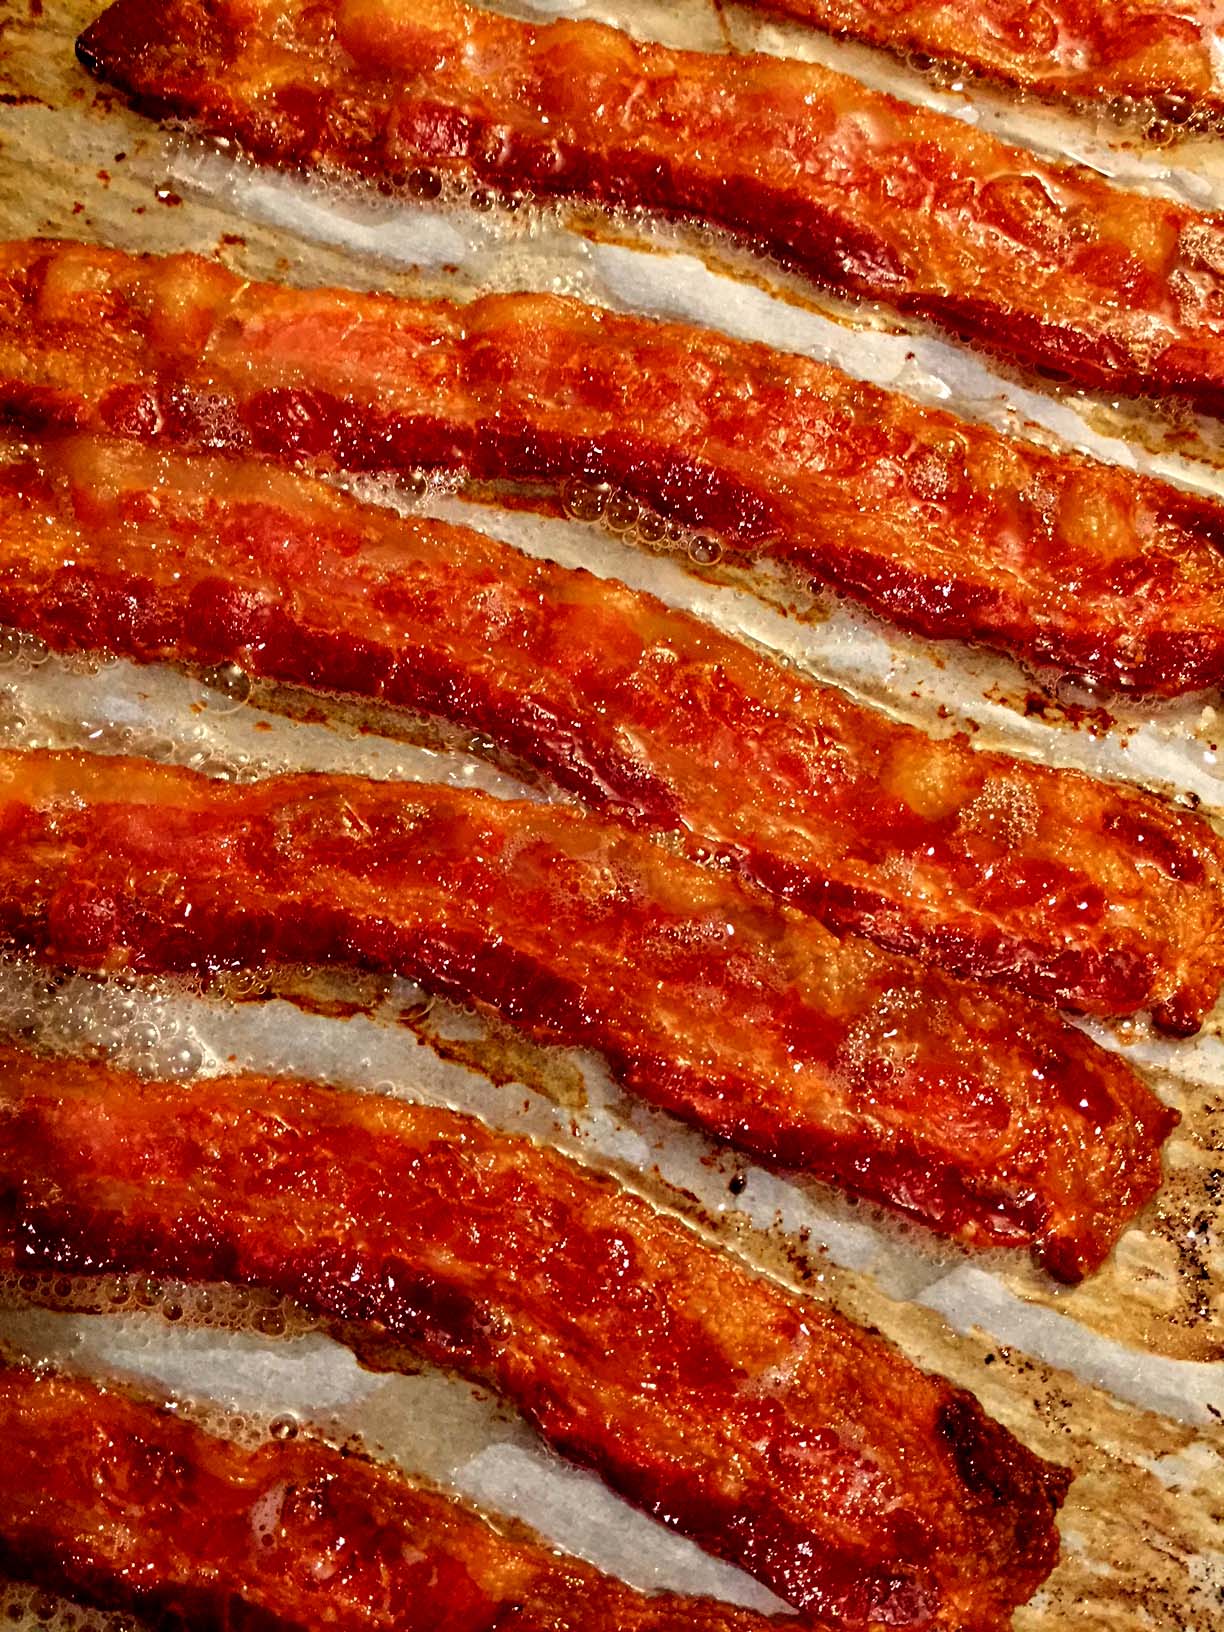 https://www.melaniecooks.com/wp-content/uploads/2017/11/baked_bacon_recipe.jpg